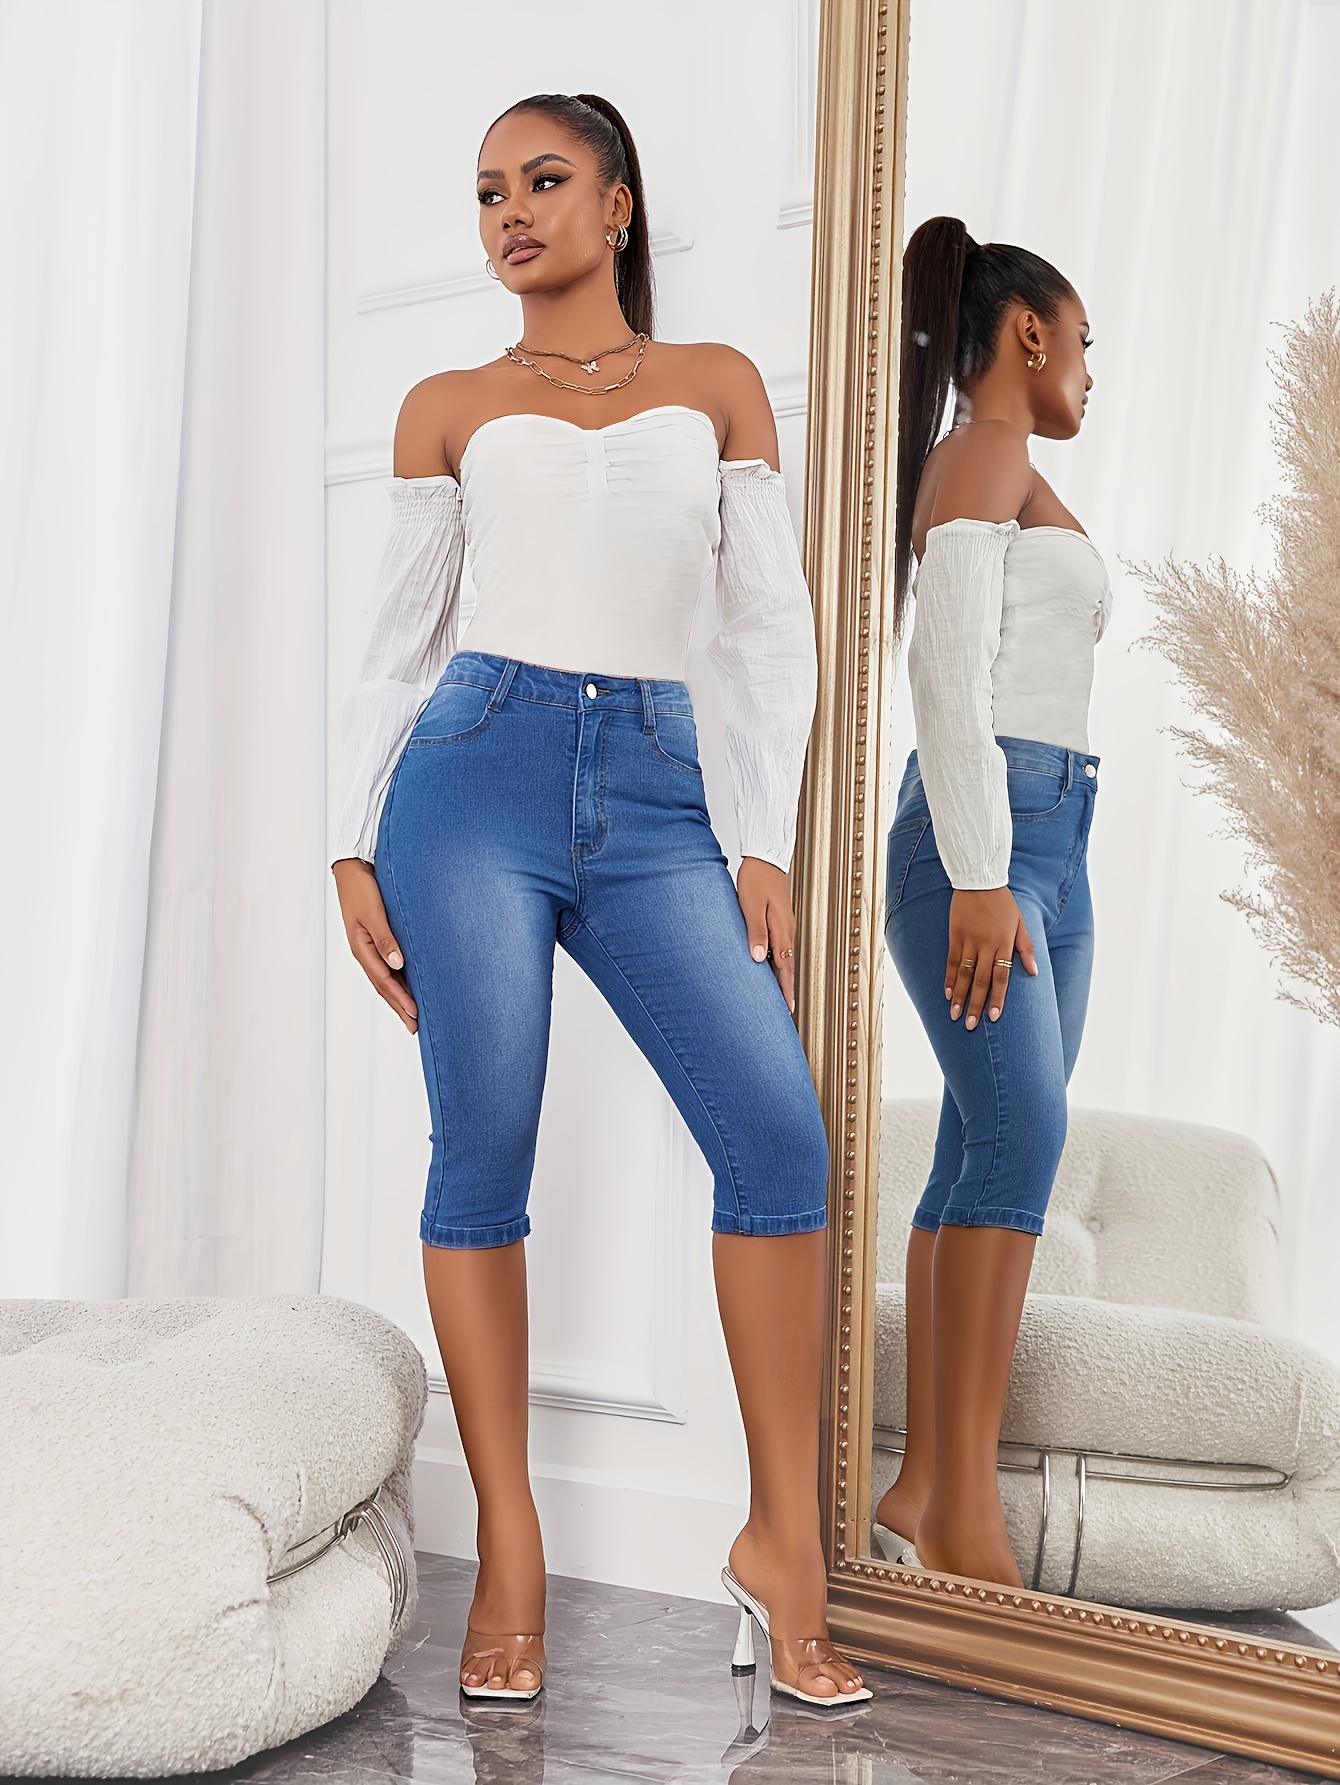 Capri Stretch Jeans For Women